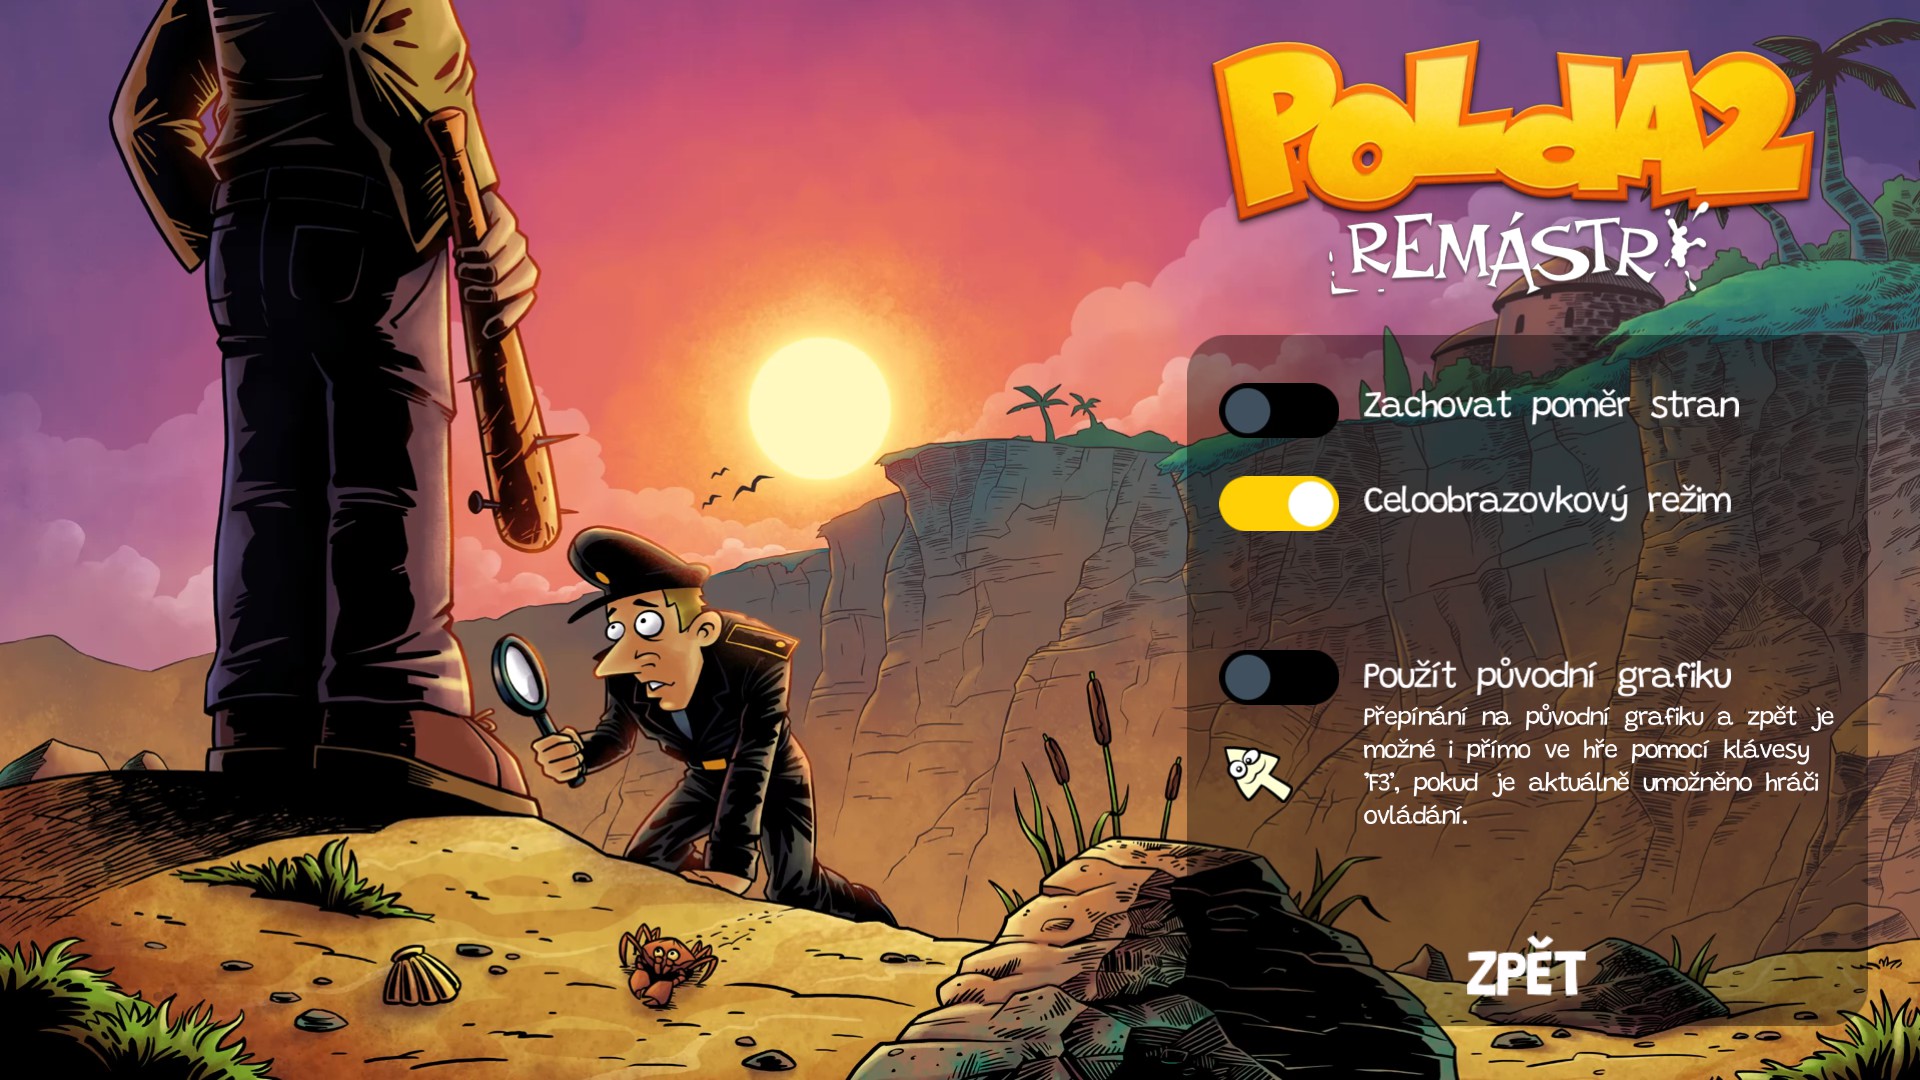 Polda 2 Remstr - screenshot 1